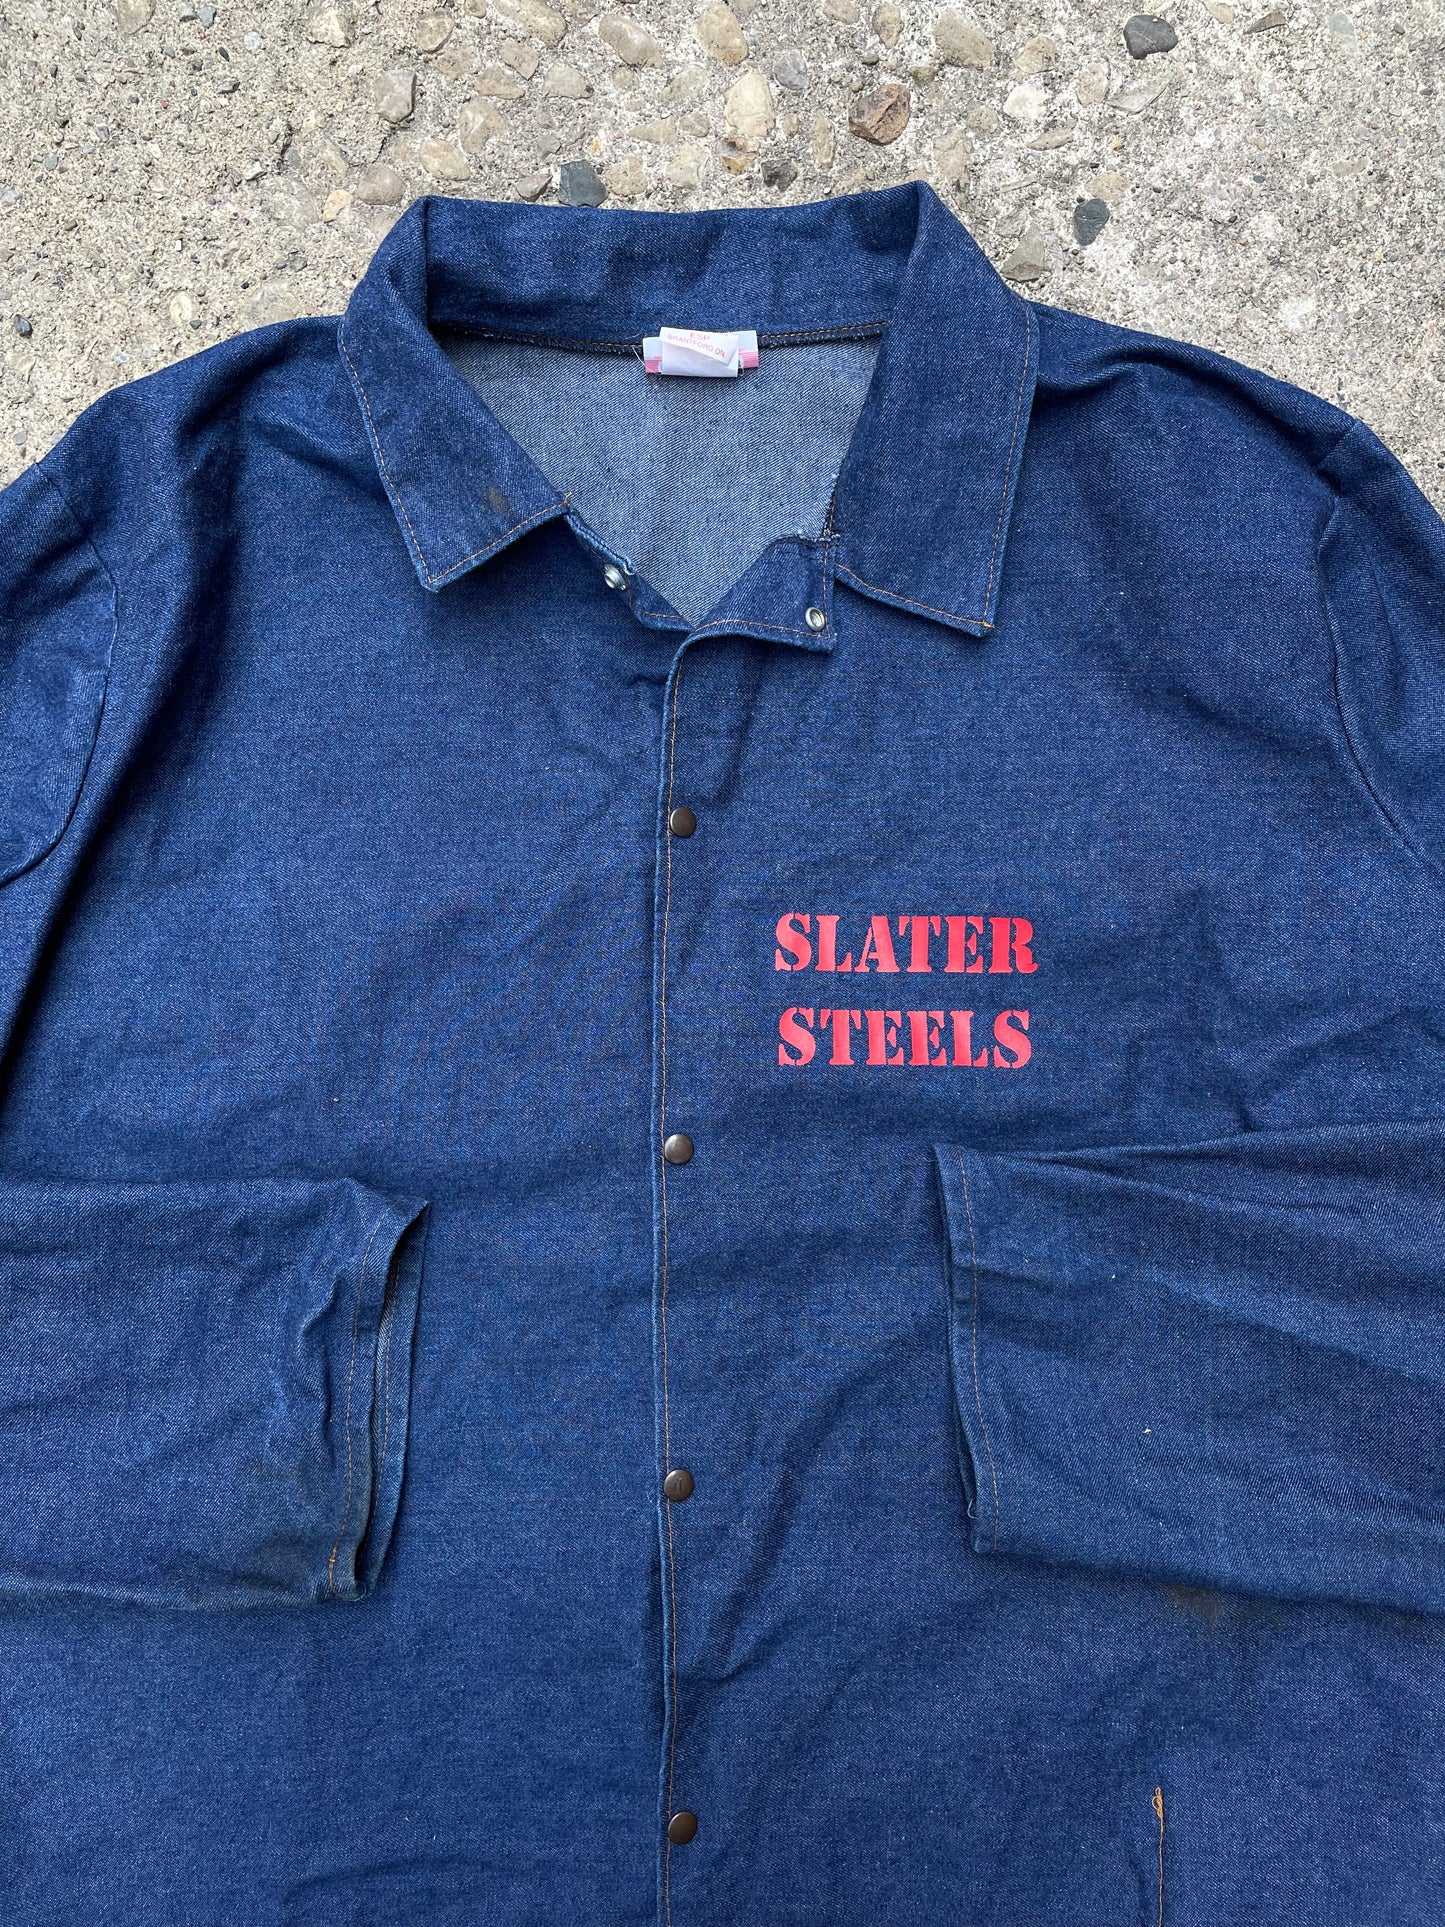 1980's Slater Steels Denim Work Jacket - XL